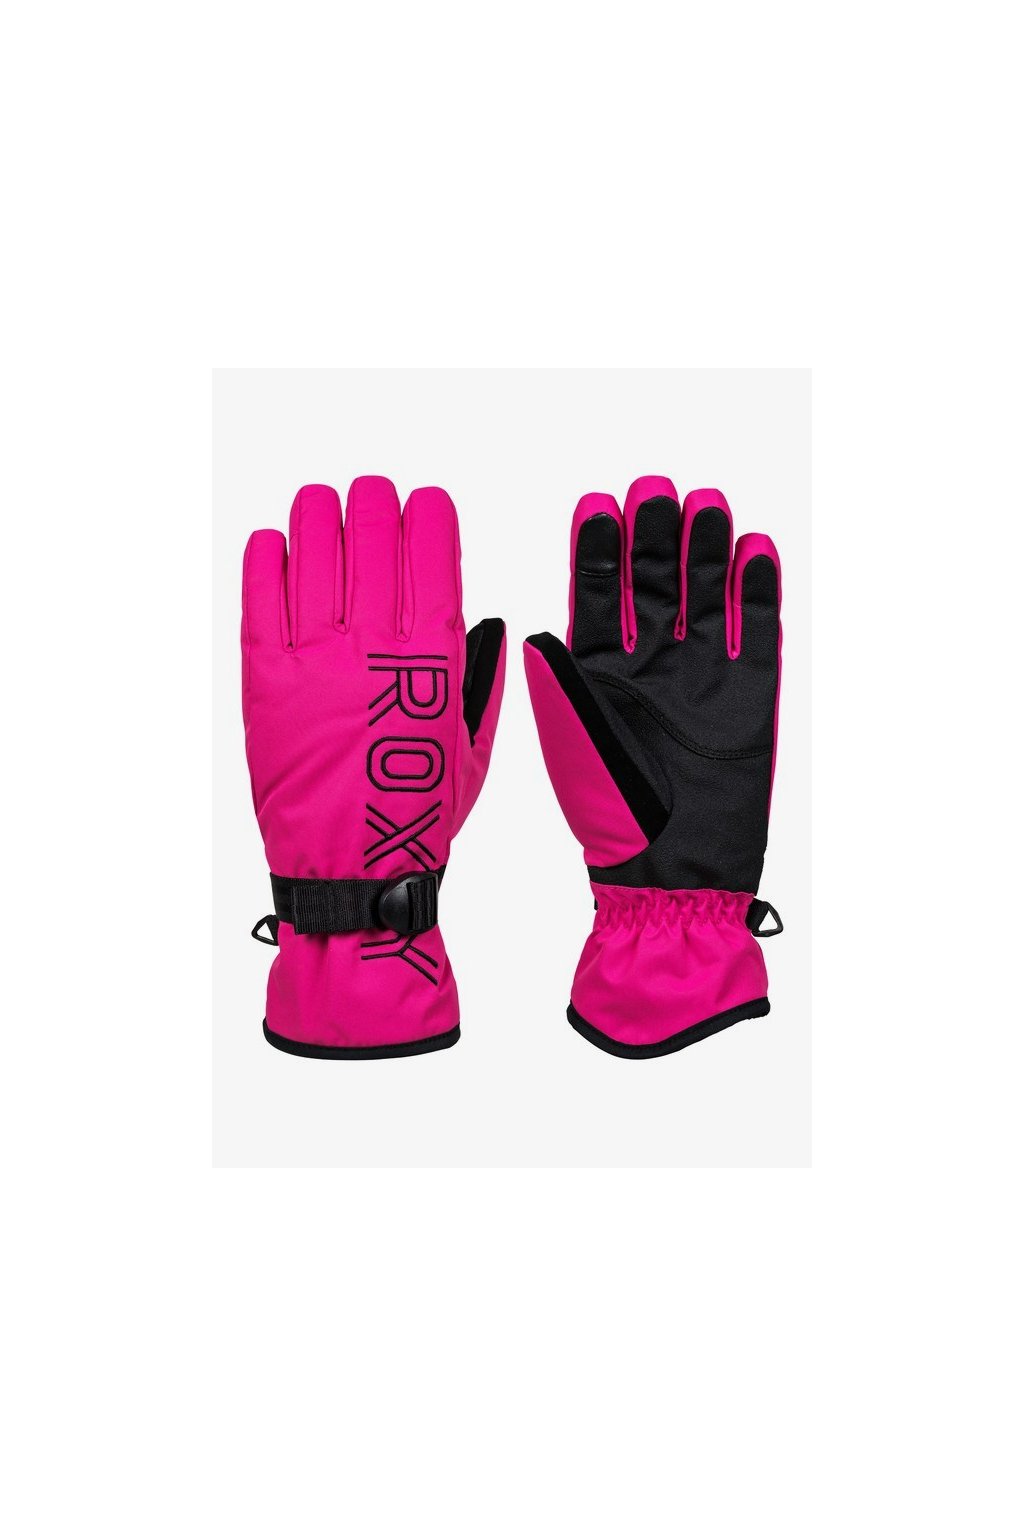 beetroot Roxy rukavice pink L FRESHFIELD GLOVES -